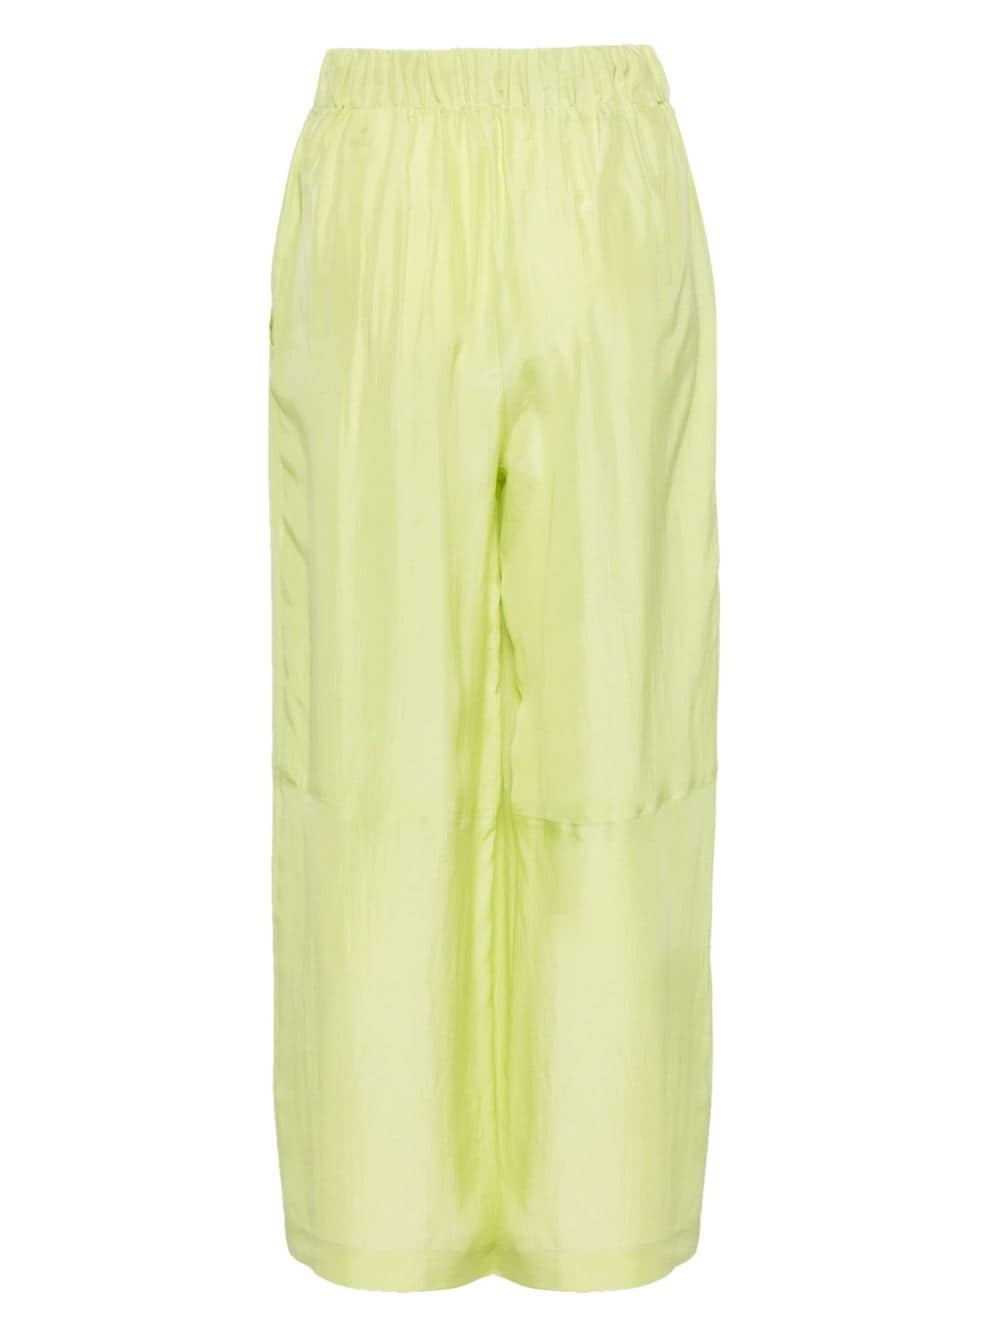 Pantalon femme vert clair